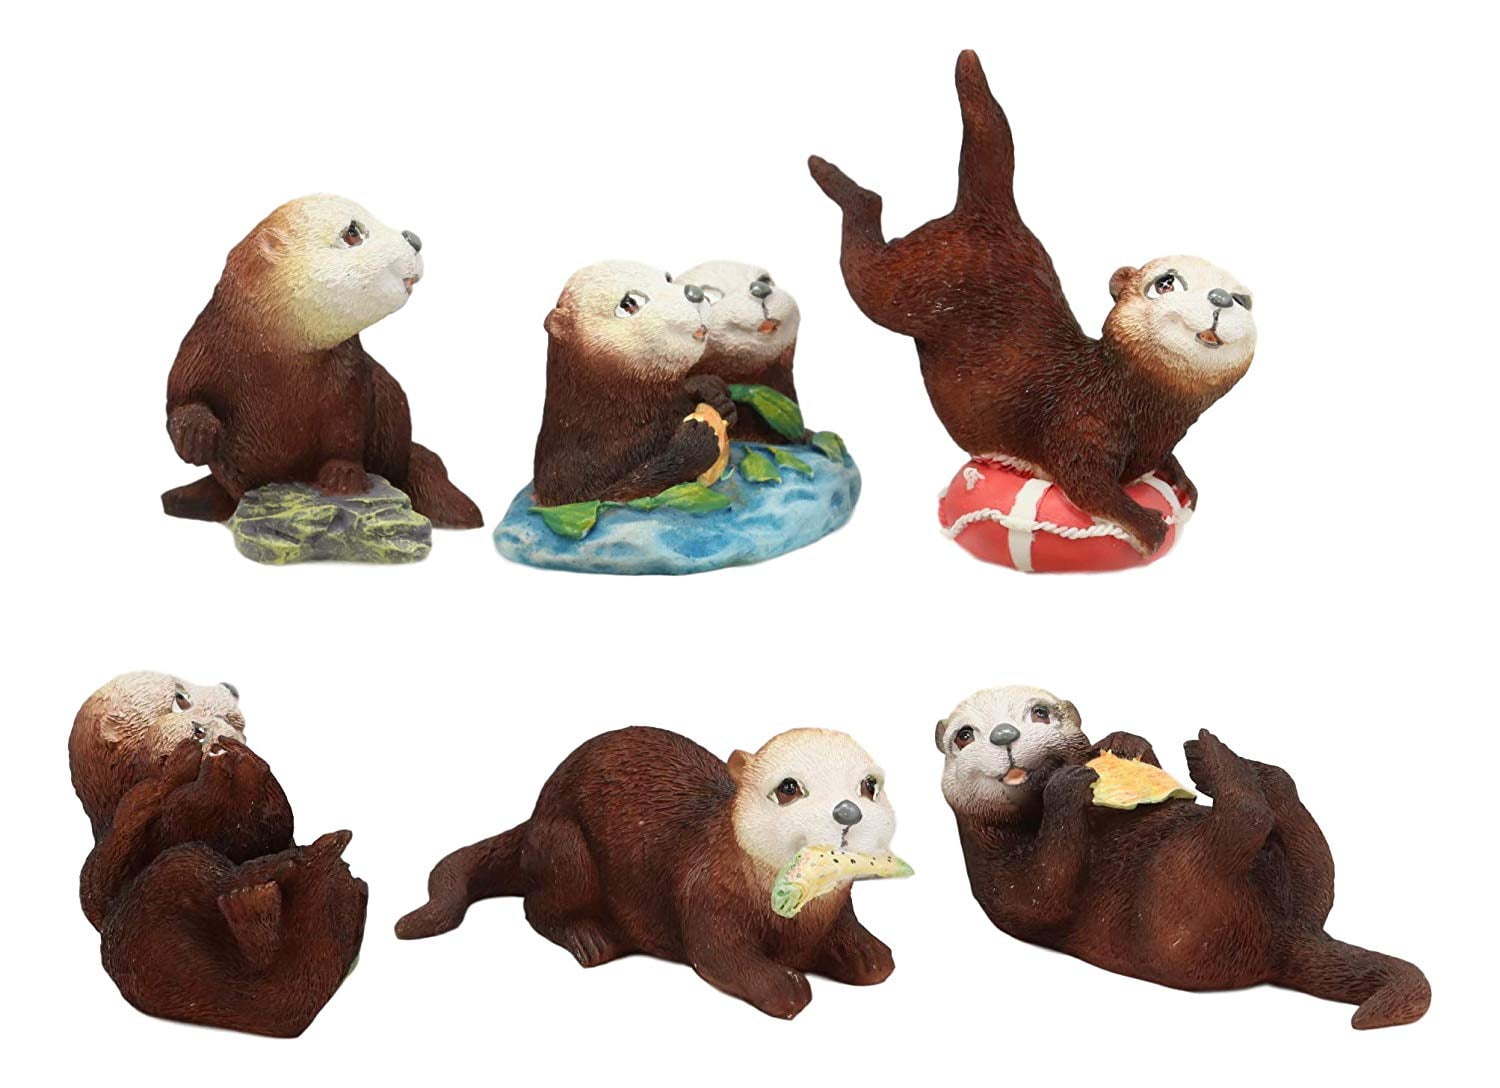 marine resin art Sea otter pup figurine cute creature one of a kind otter sculpture unique gift